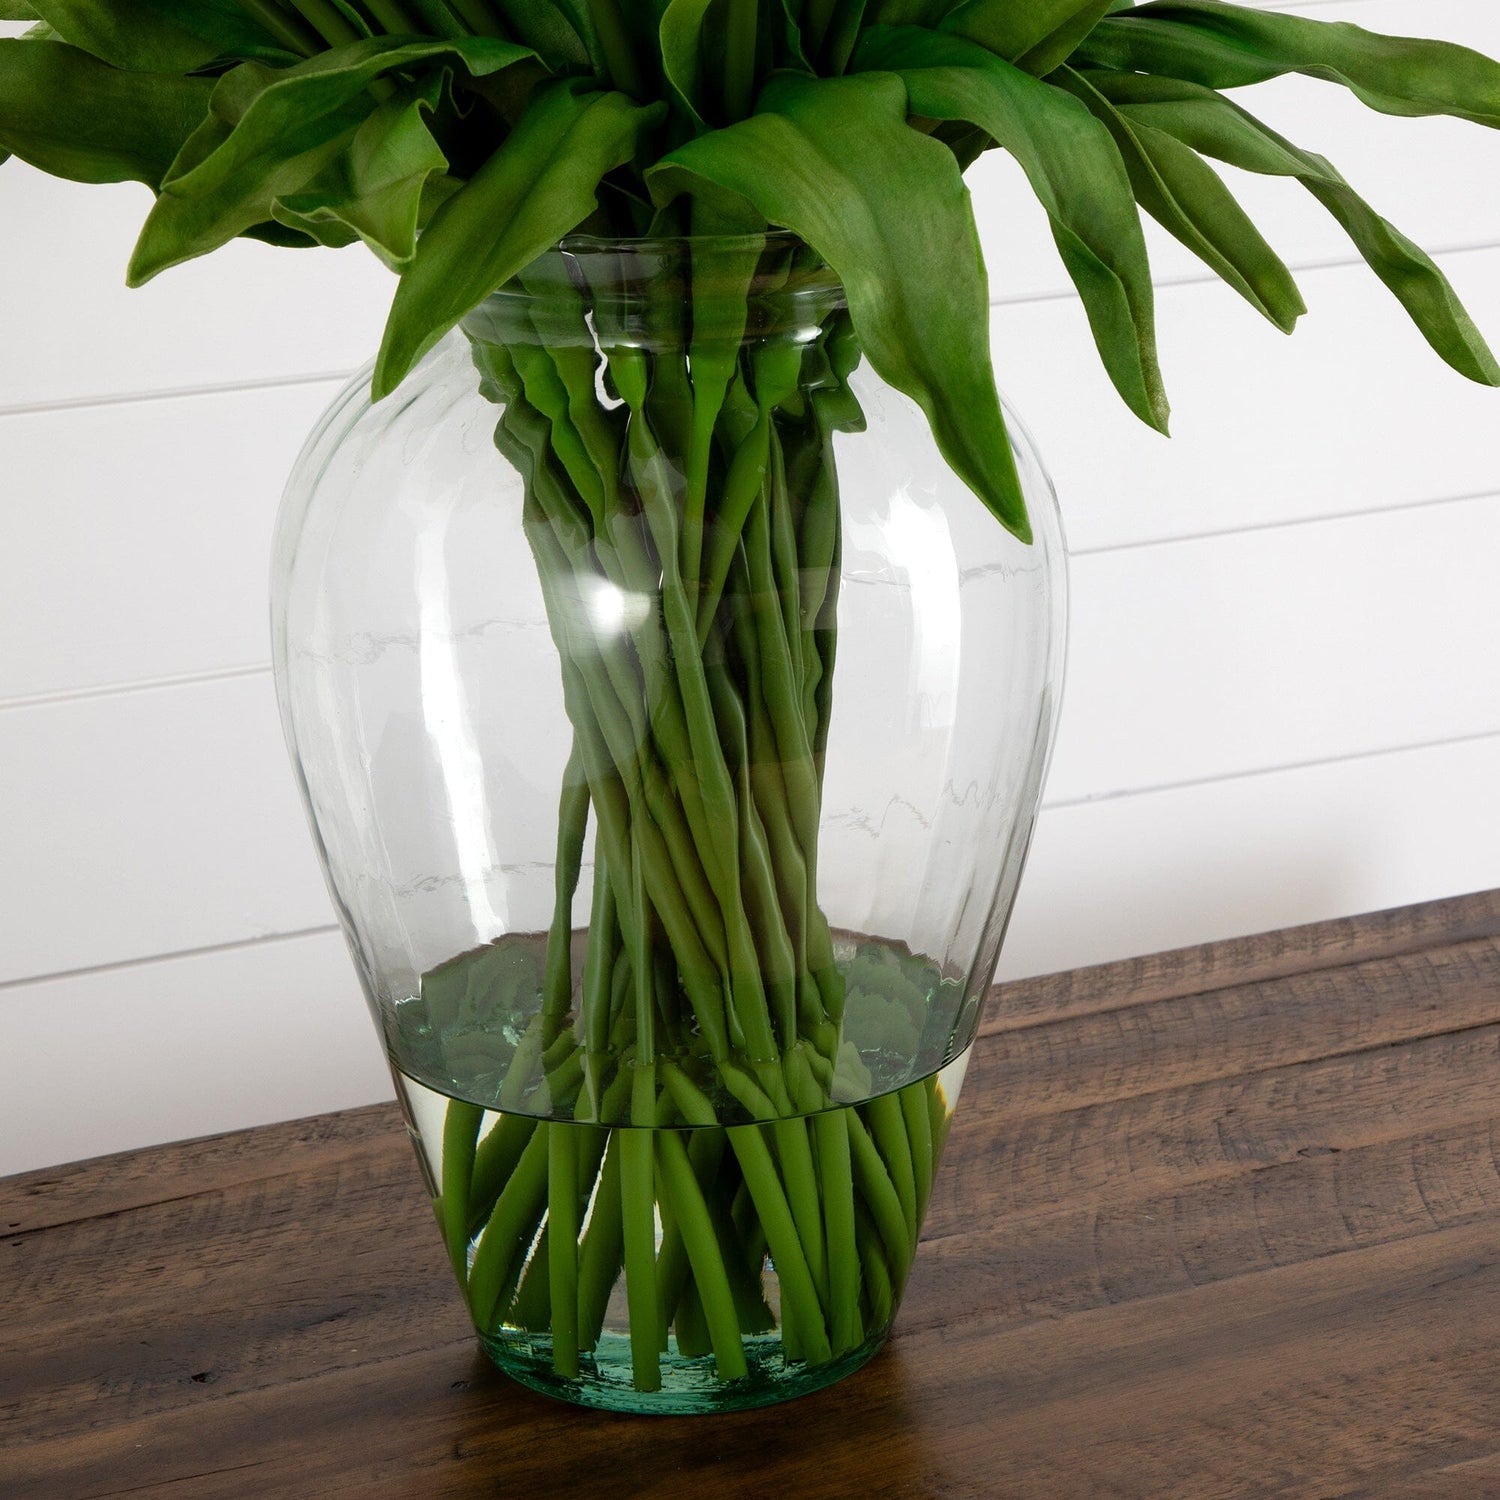 Signature Collection 24” Tulip Artificial Arrangement in Glass Vase